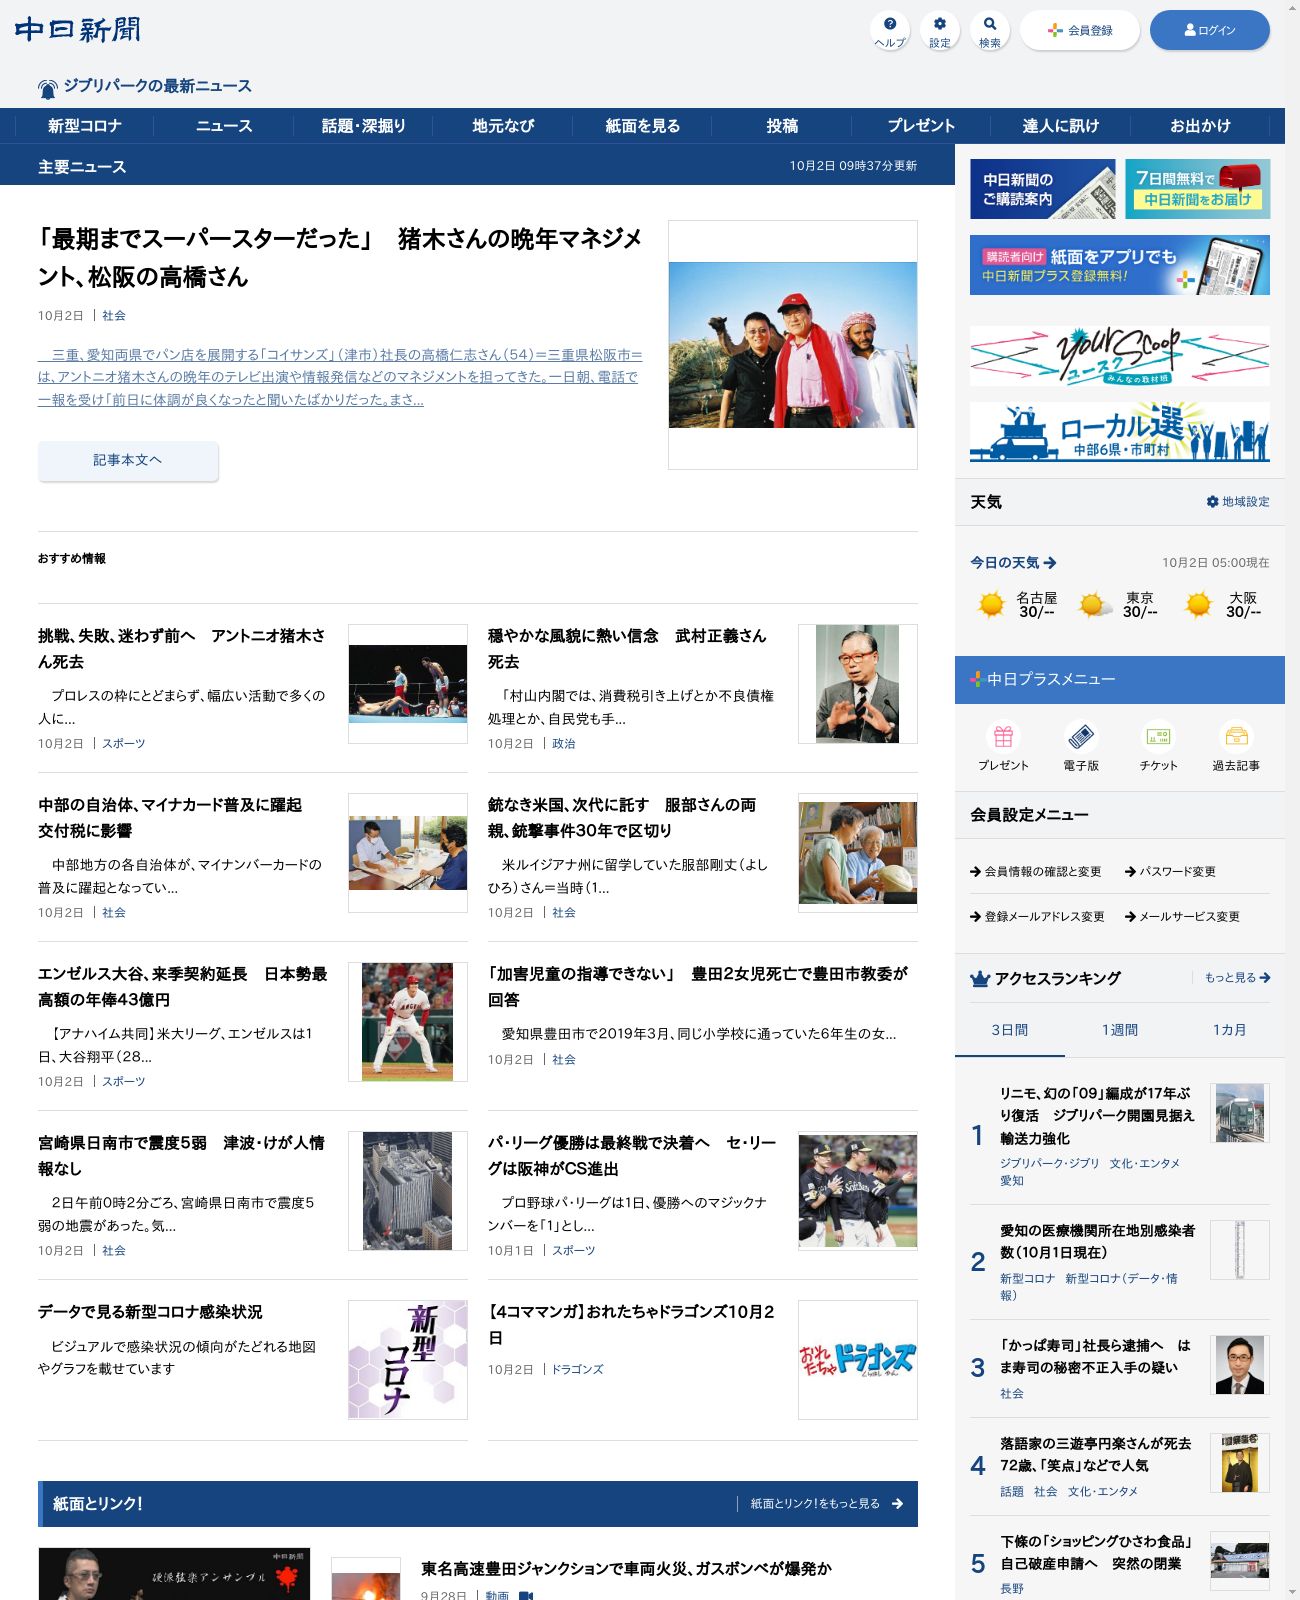 Chunichi Shimbun at 2022-10-02 11:17:48+09:00 local time